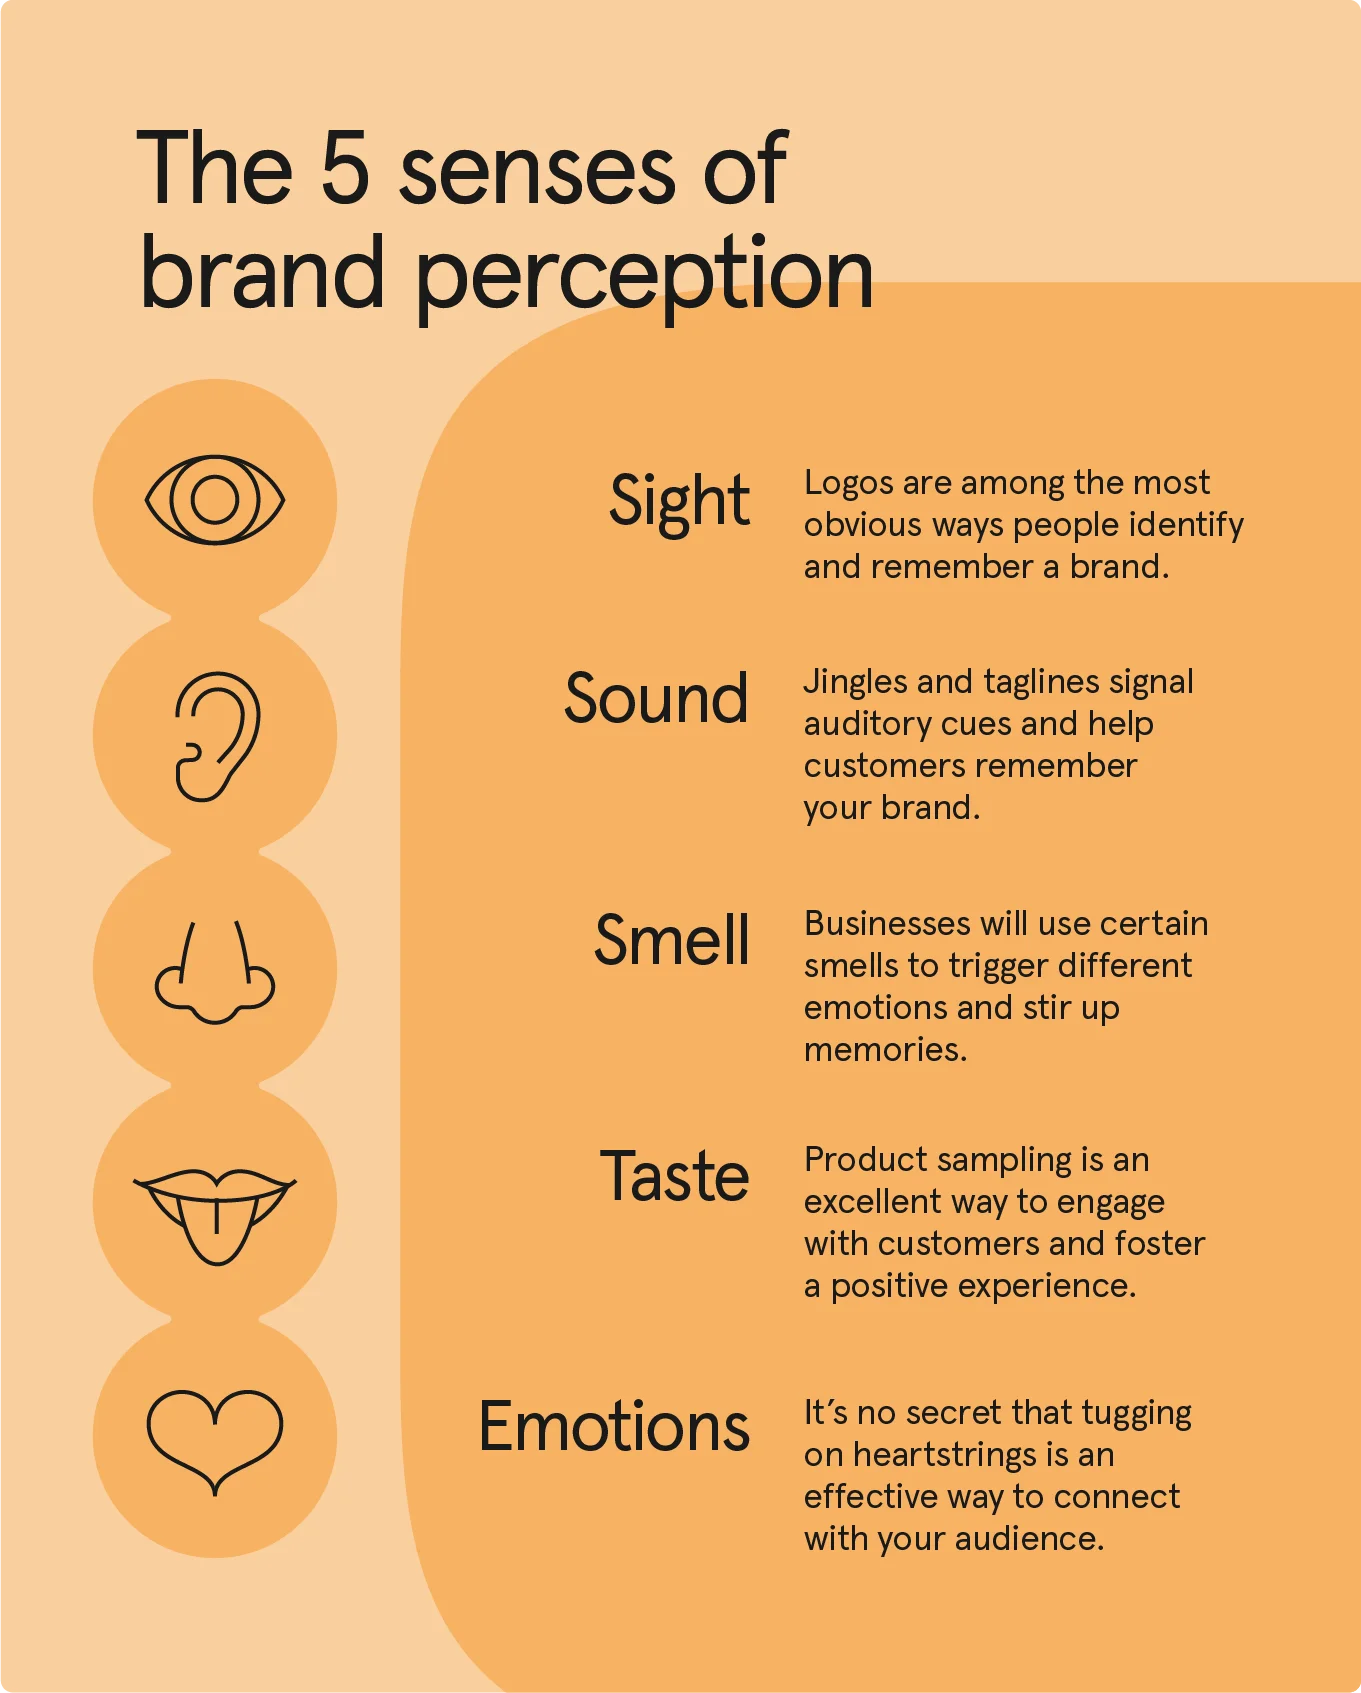 The five senses inform brand perception.